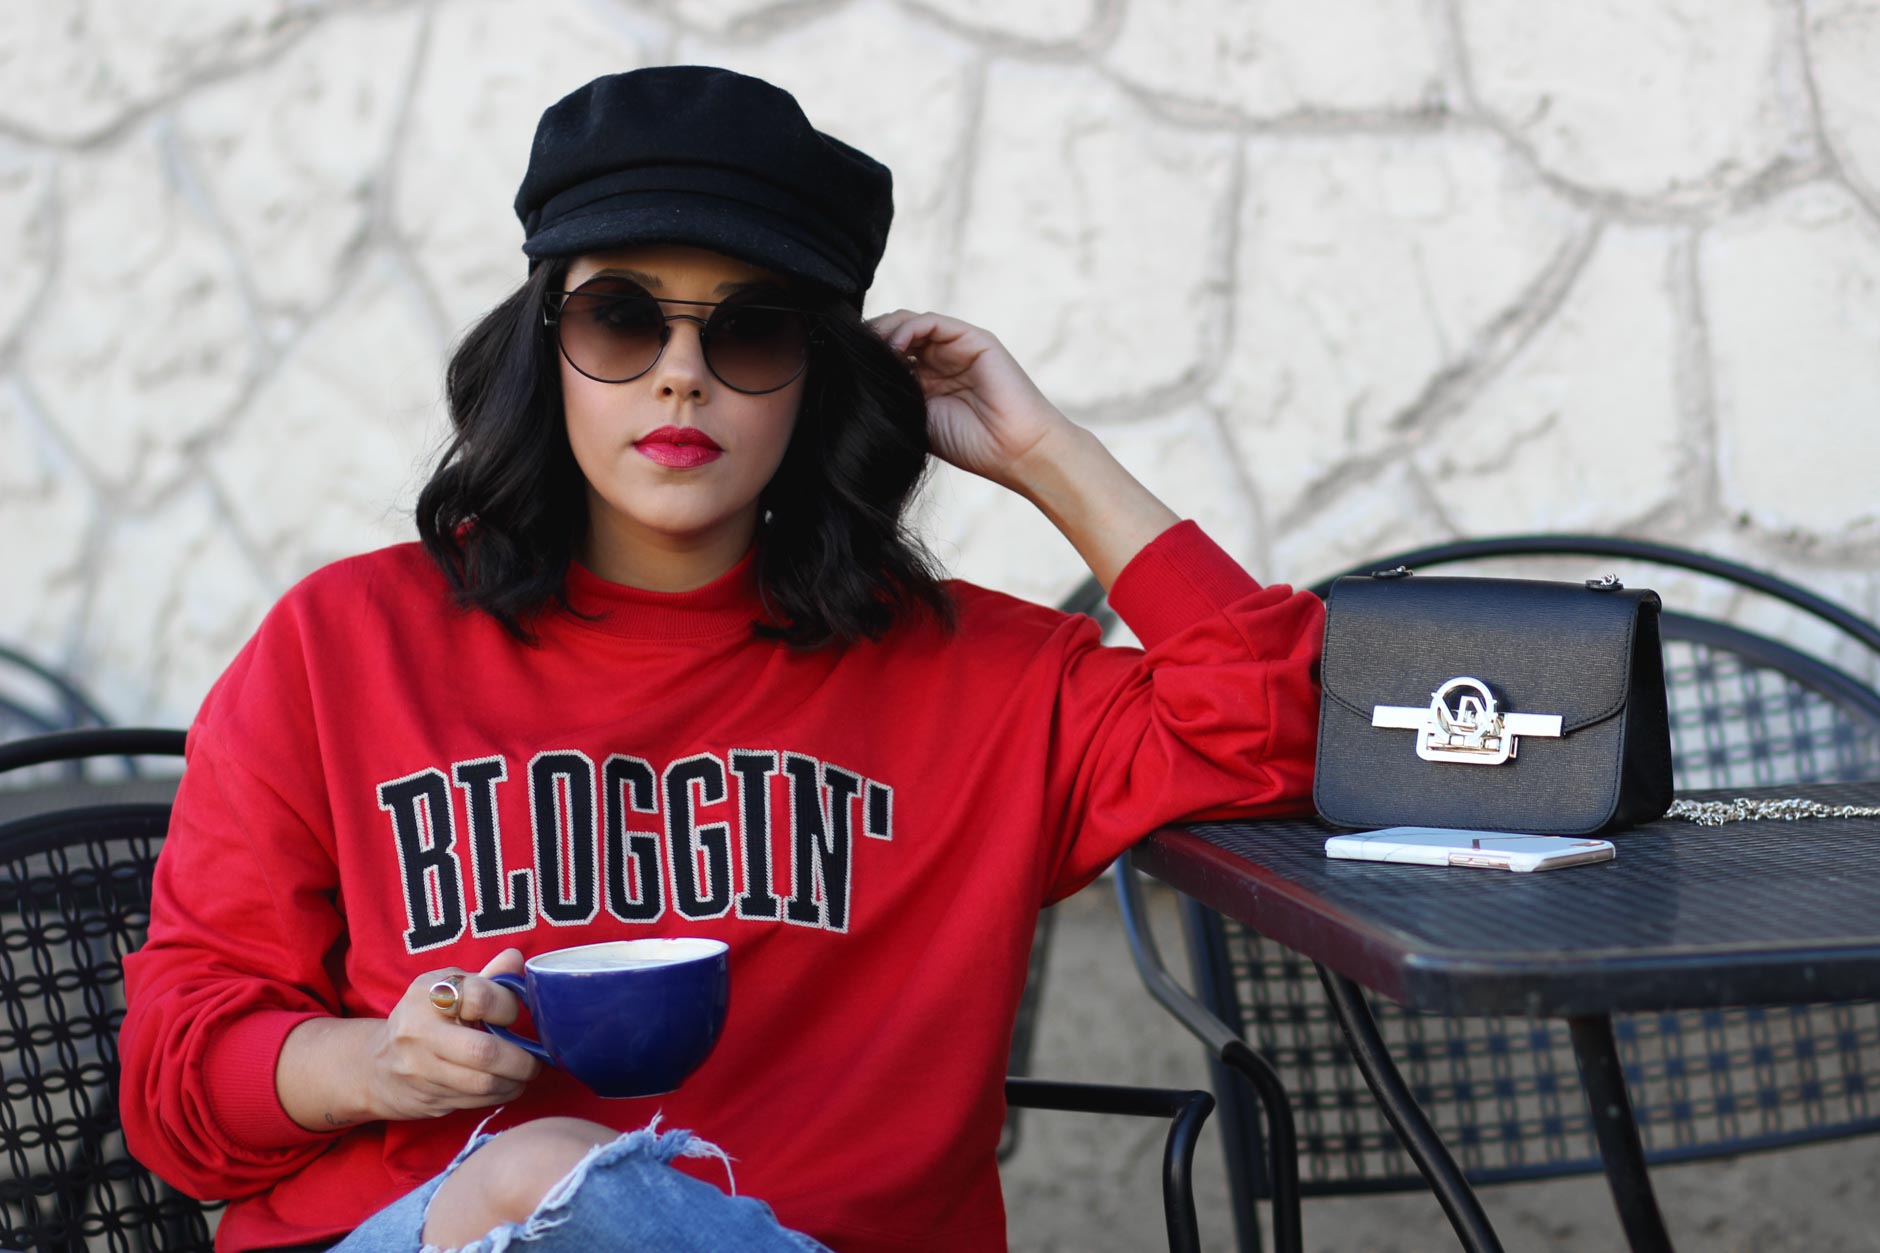 lifestyle blogger naty michele wearing a blogging sweatshirt holding coffee